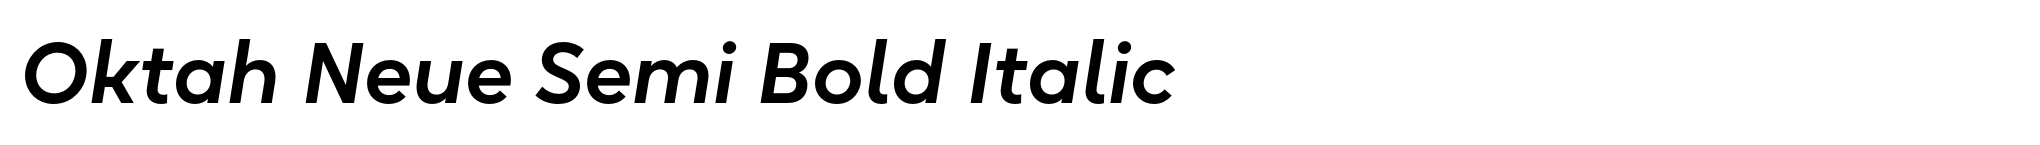 Oktah Neue Semi Bold Italic image